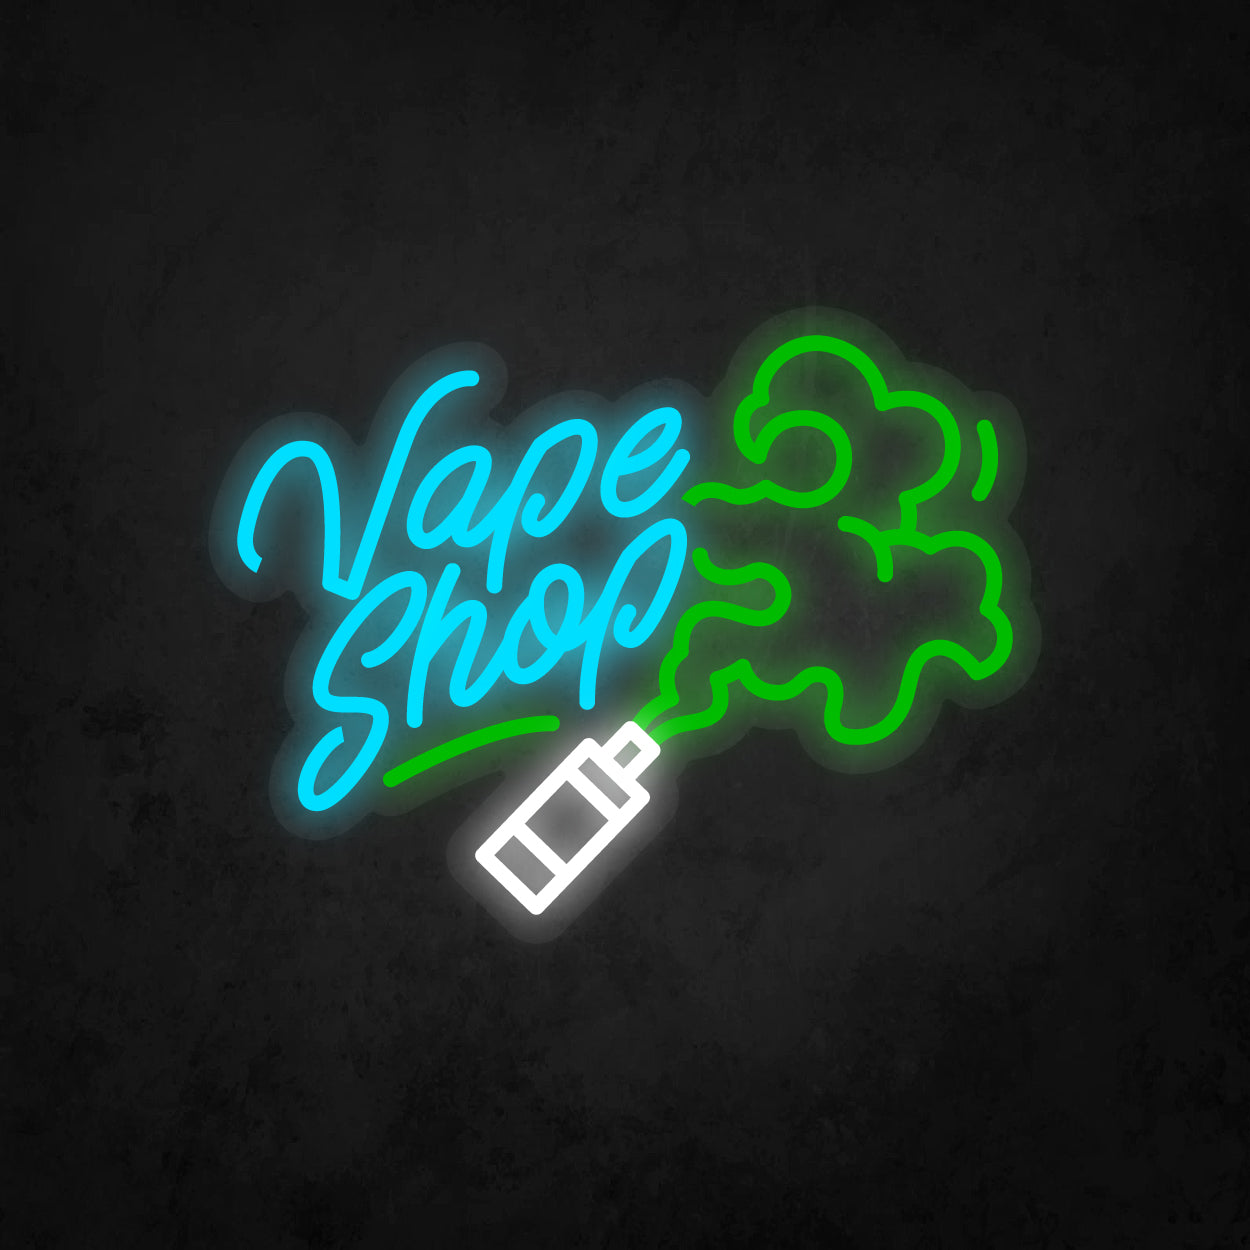 LED Neon Sign - Vape Shop Small